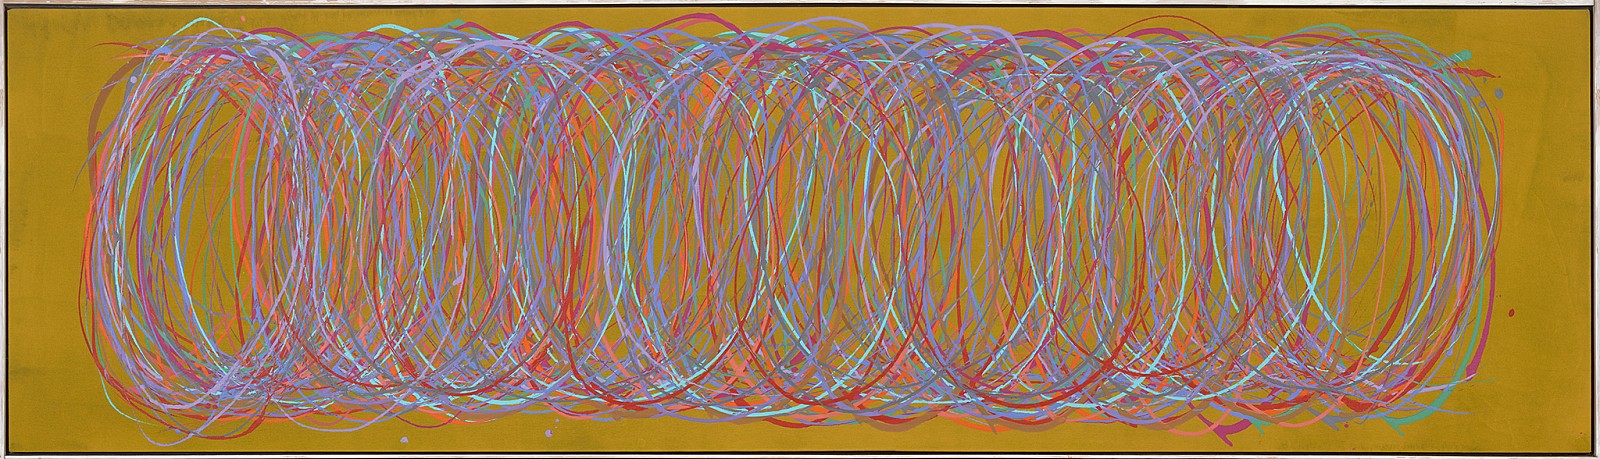 Dan Christensen, Casa Fiesta, 2005
Acrylic on canvas, 28 x 100 in. (71.1 x 254 cm)
CHR-00246